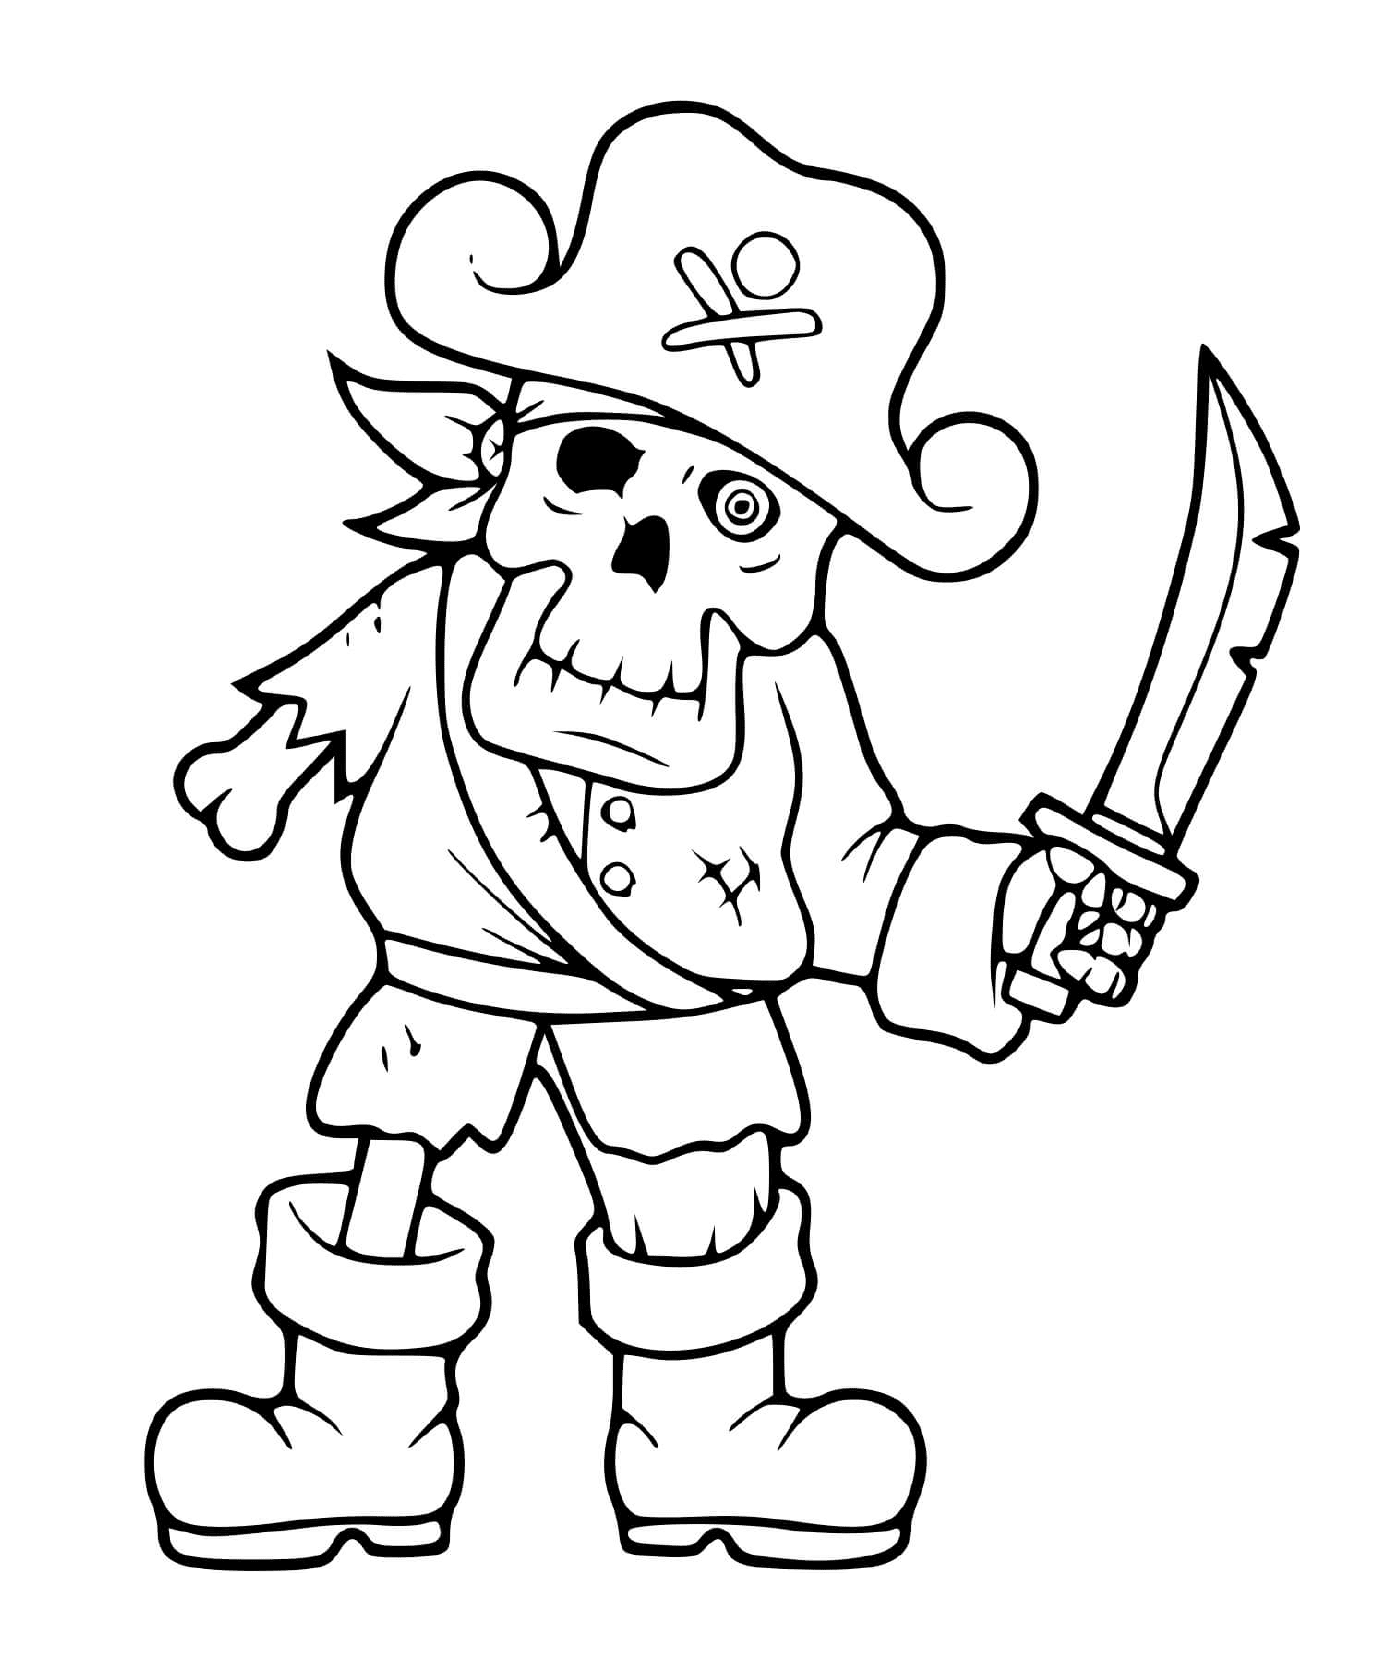  Esqueleto de pirata aterrador 